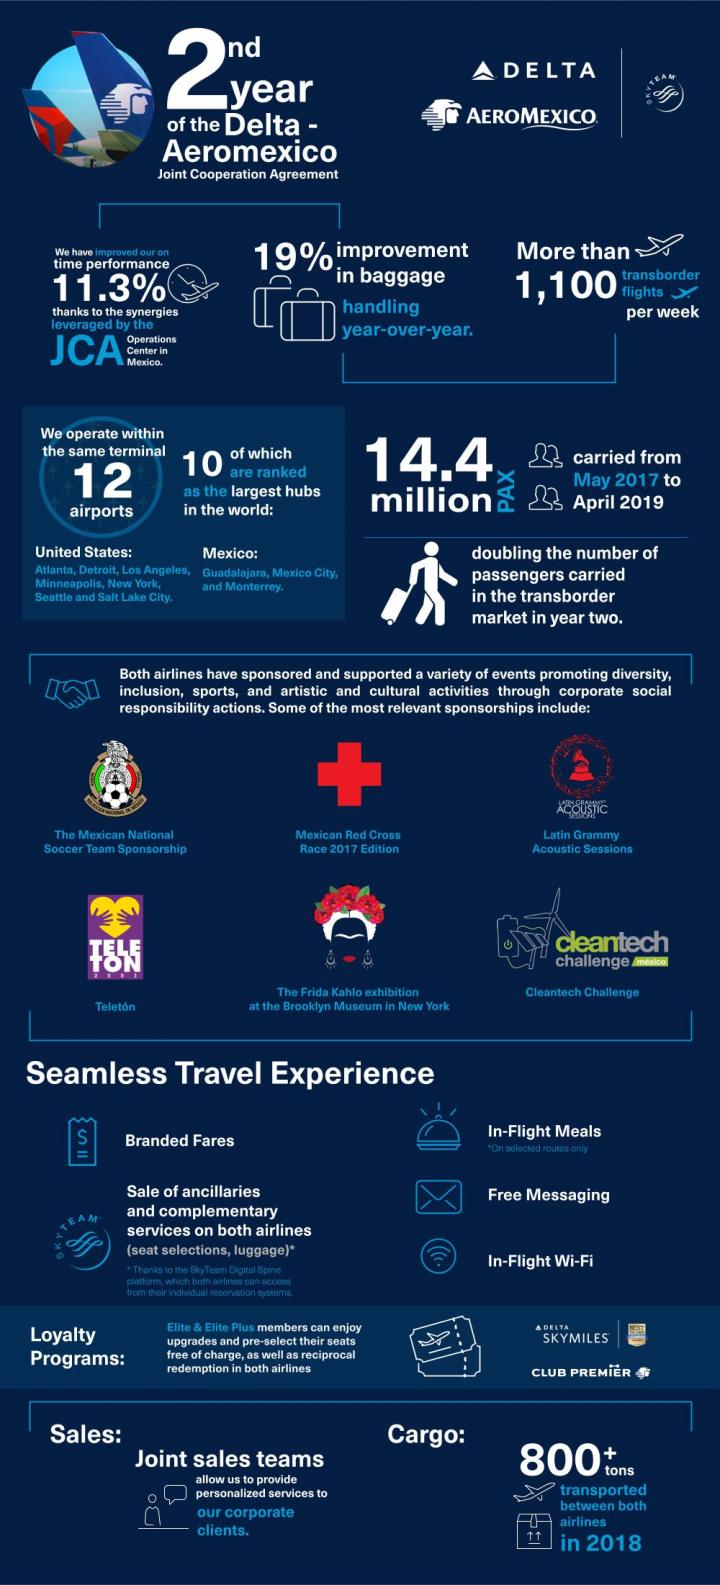 Delta Aeromexico year 2 infographic